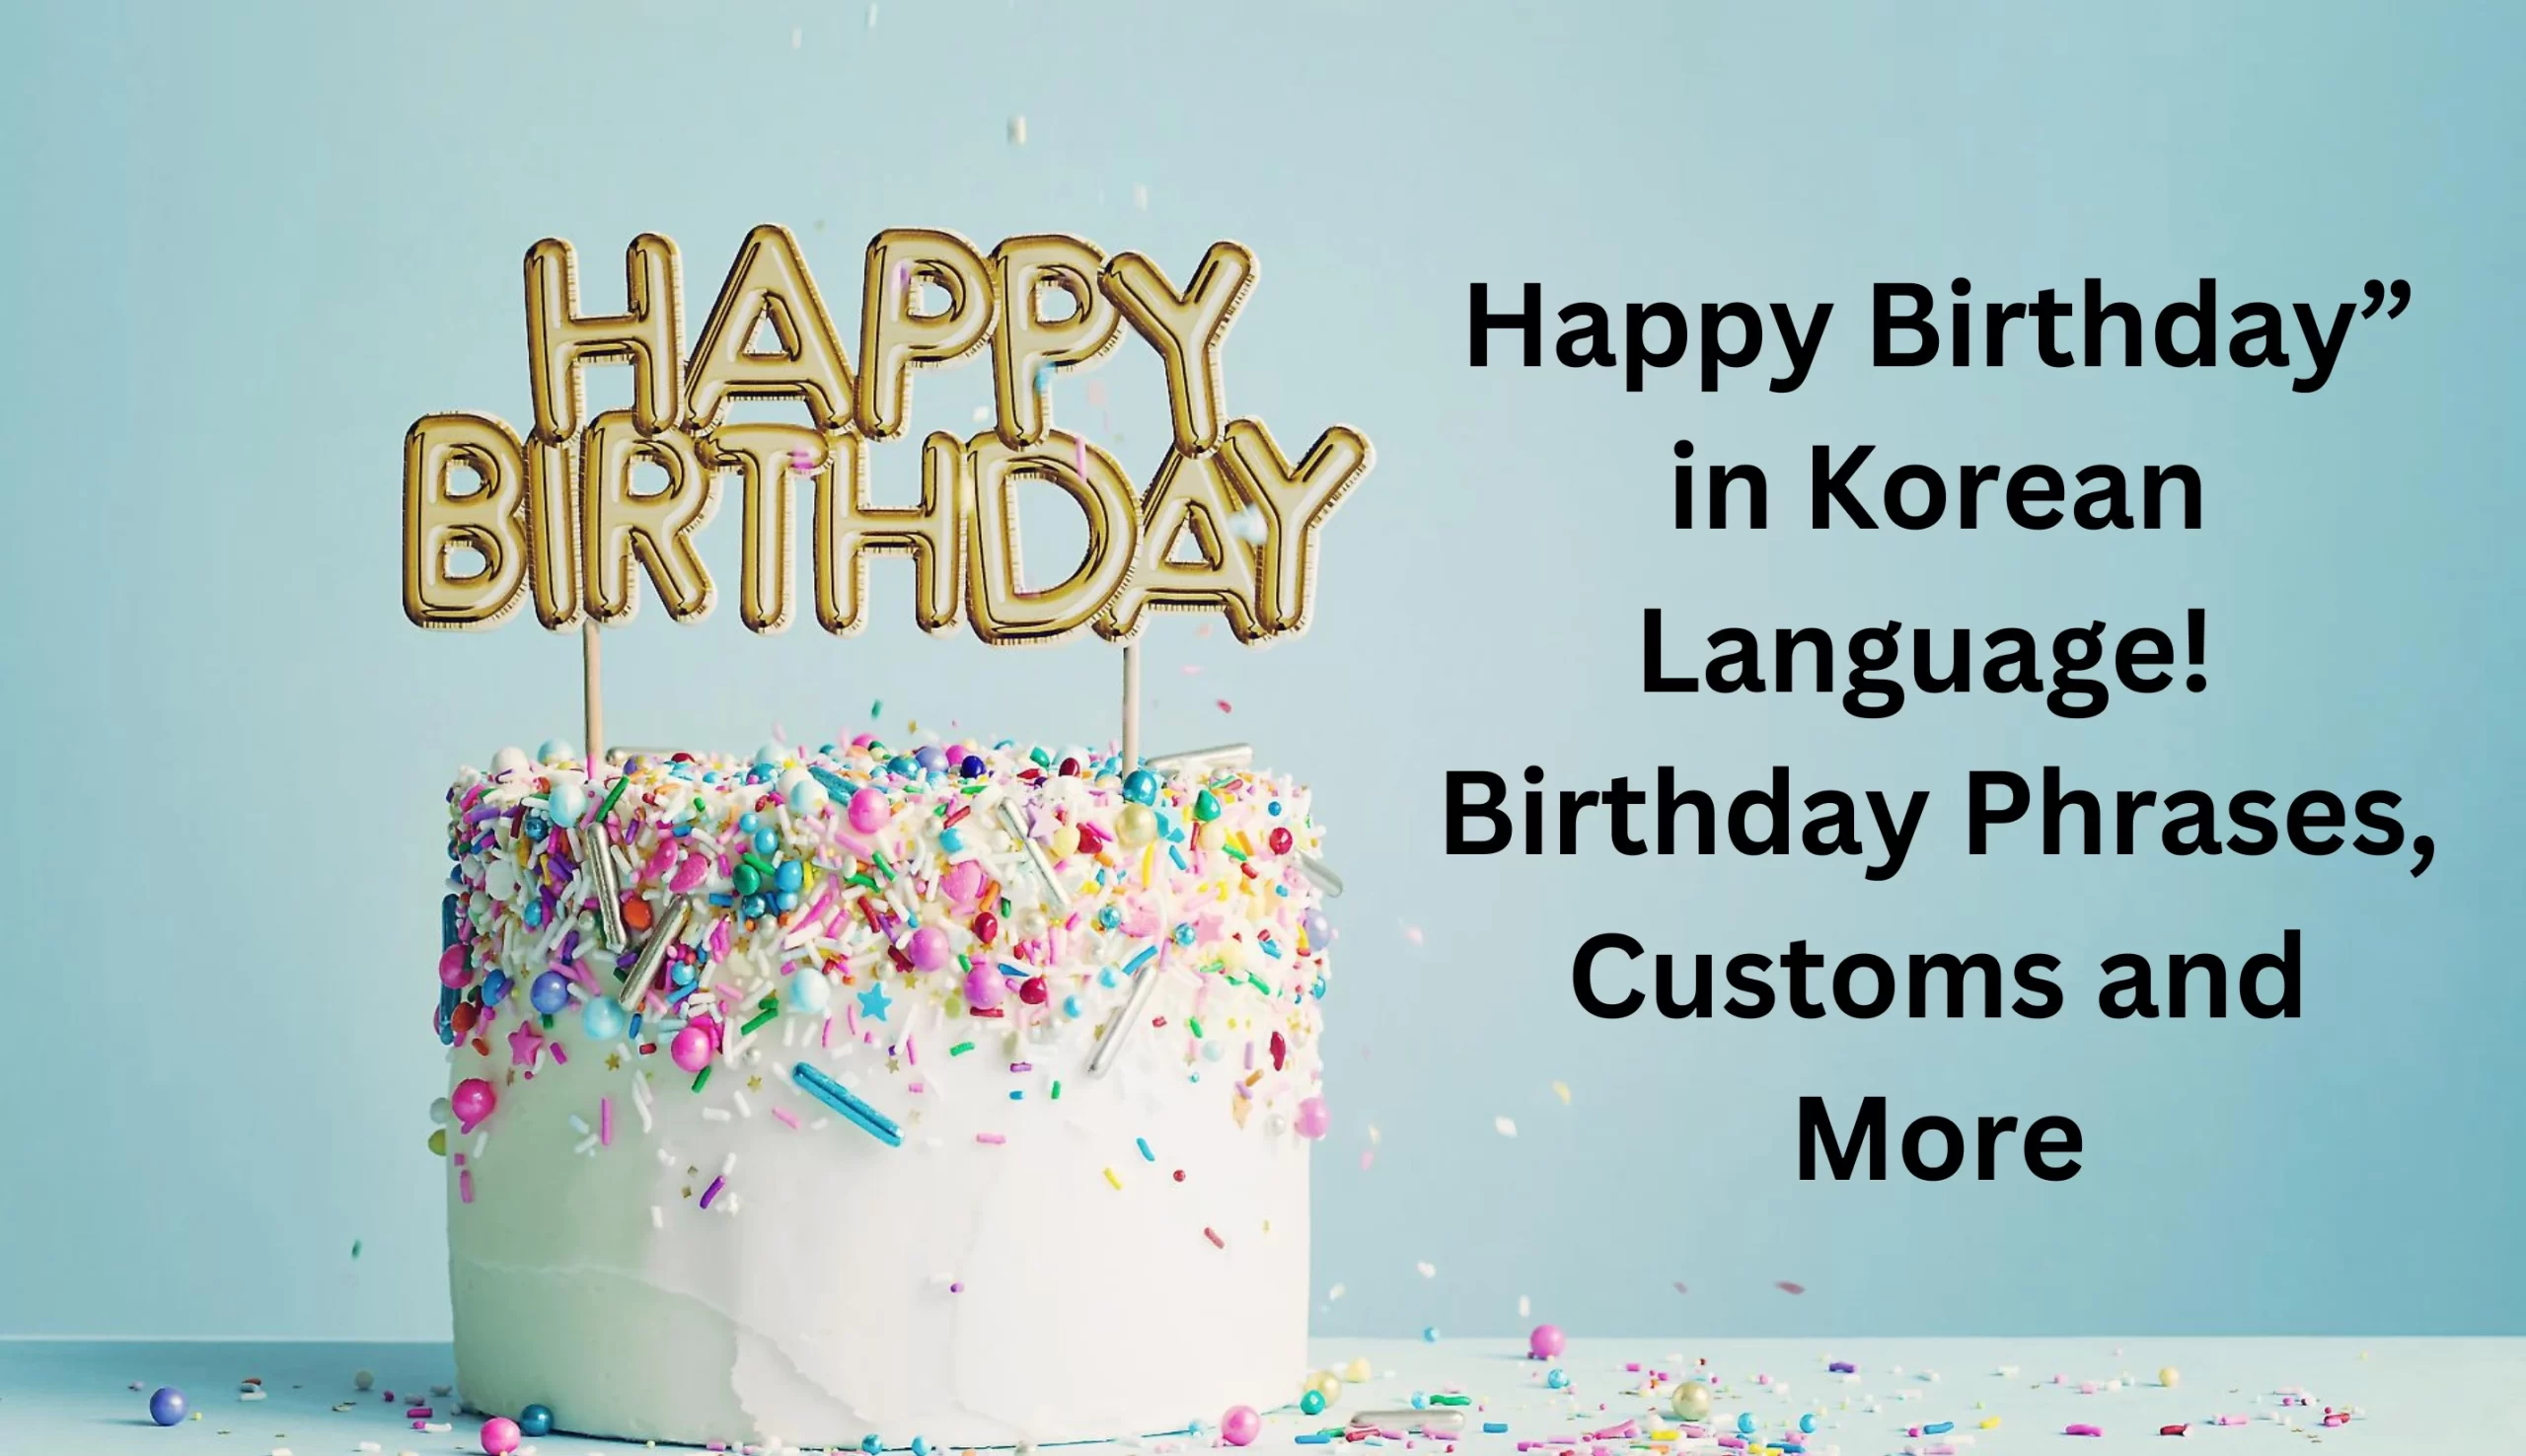 Happy Birthday” in Korean! Plus Birthday Phrases, Customs and More